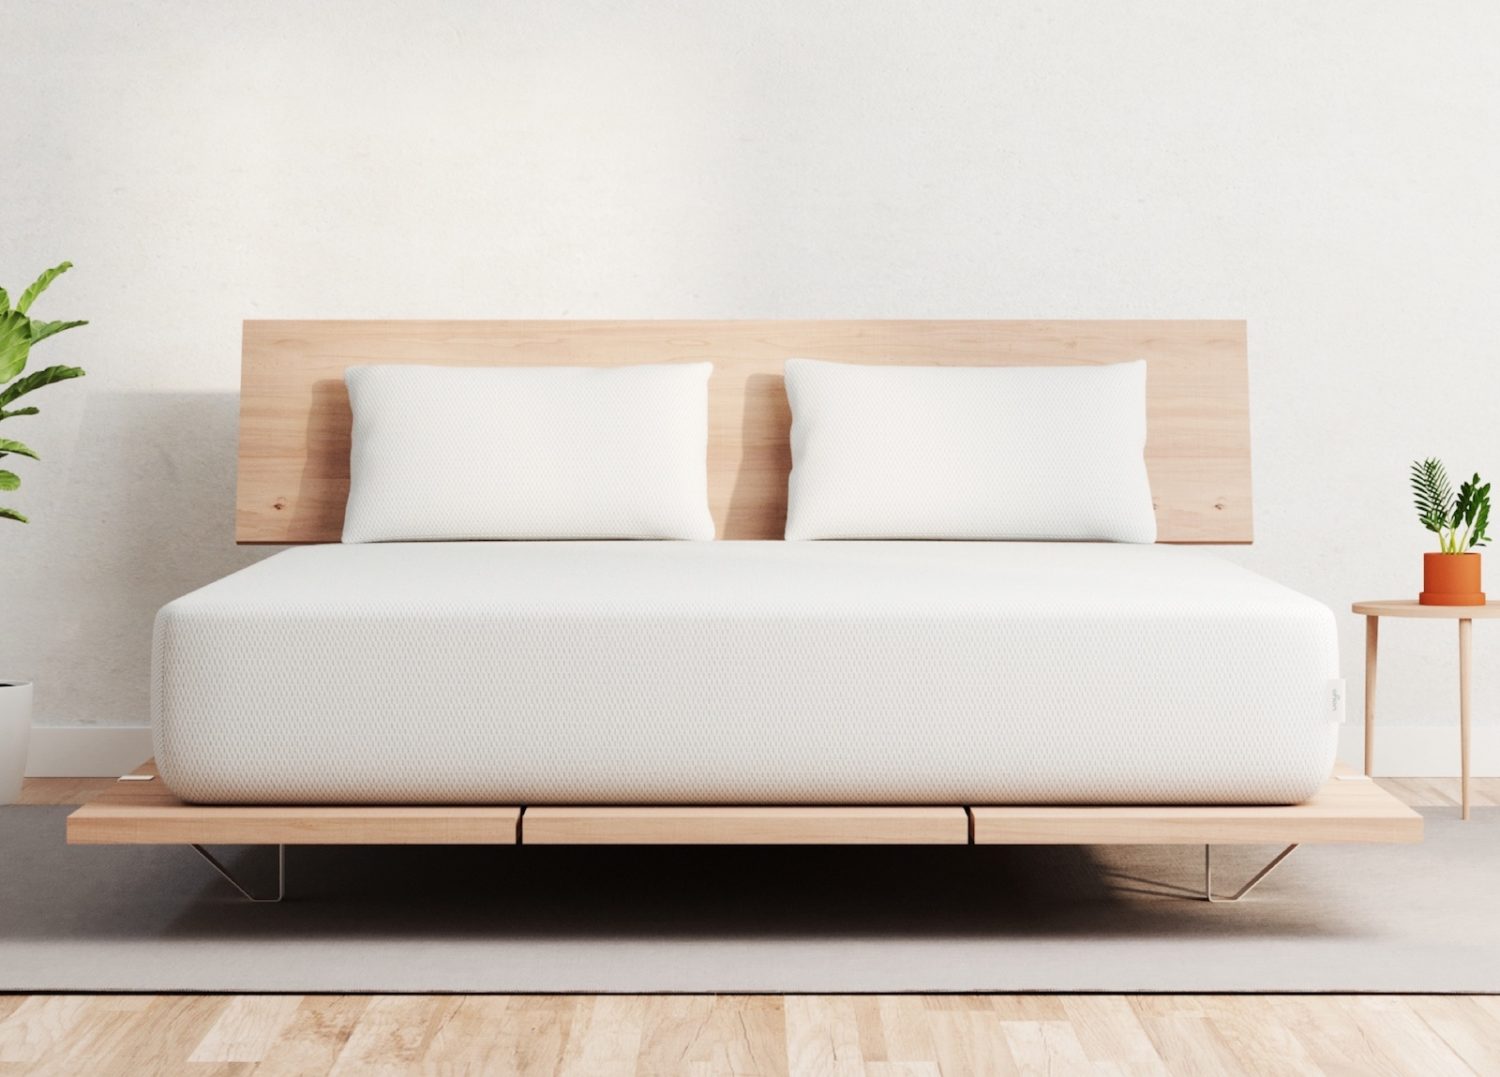 budget hybrid mattress made in usa